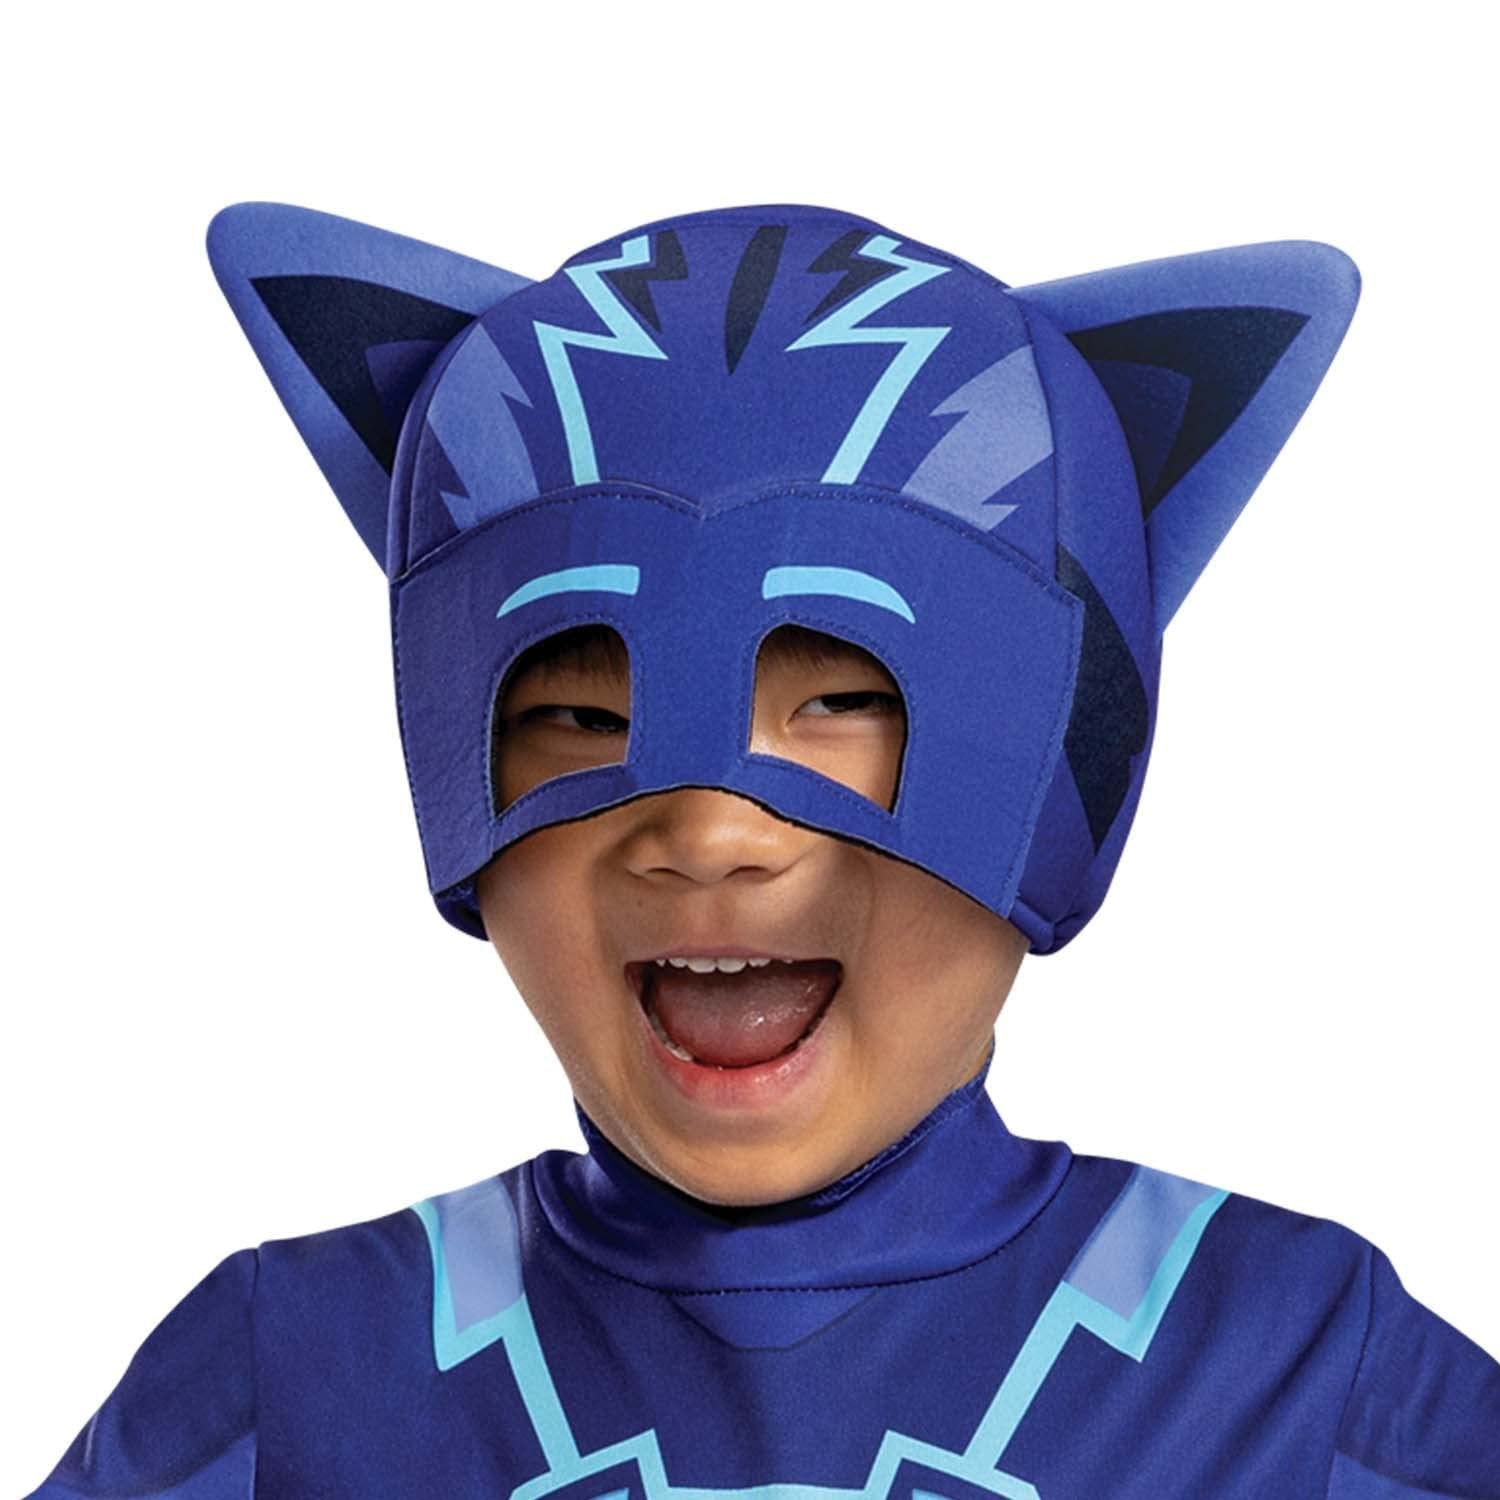 Disguise Catboy Costume Kids PJ Masks Megasuit Jumpsuit Mask Toddler Small 2T As Shown